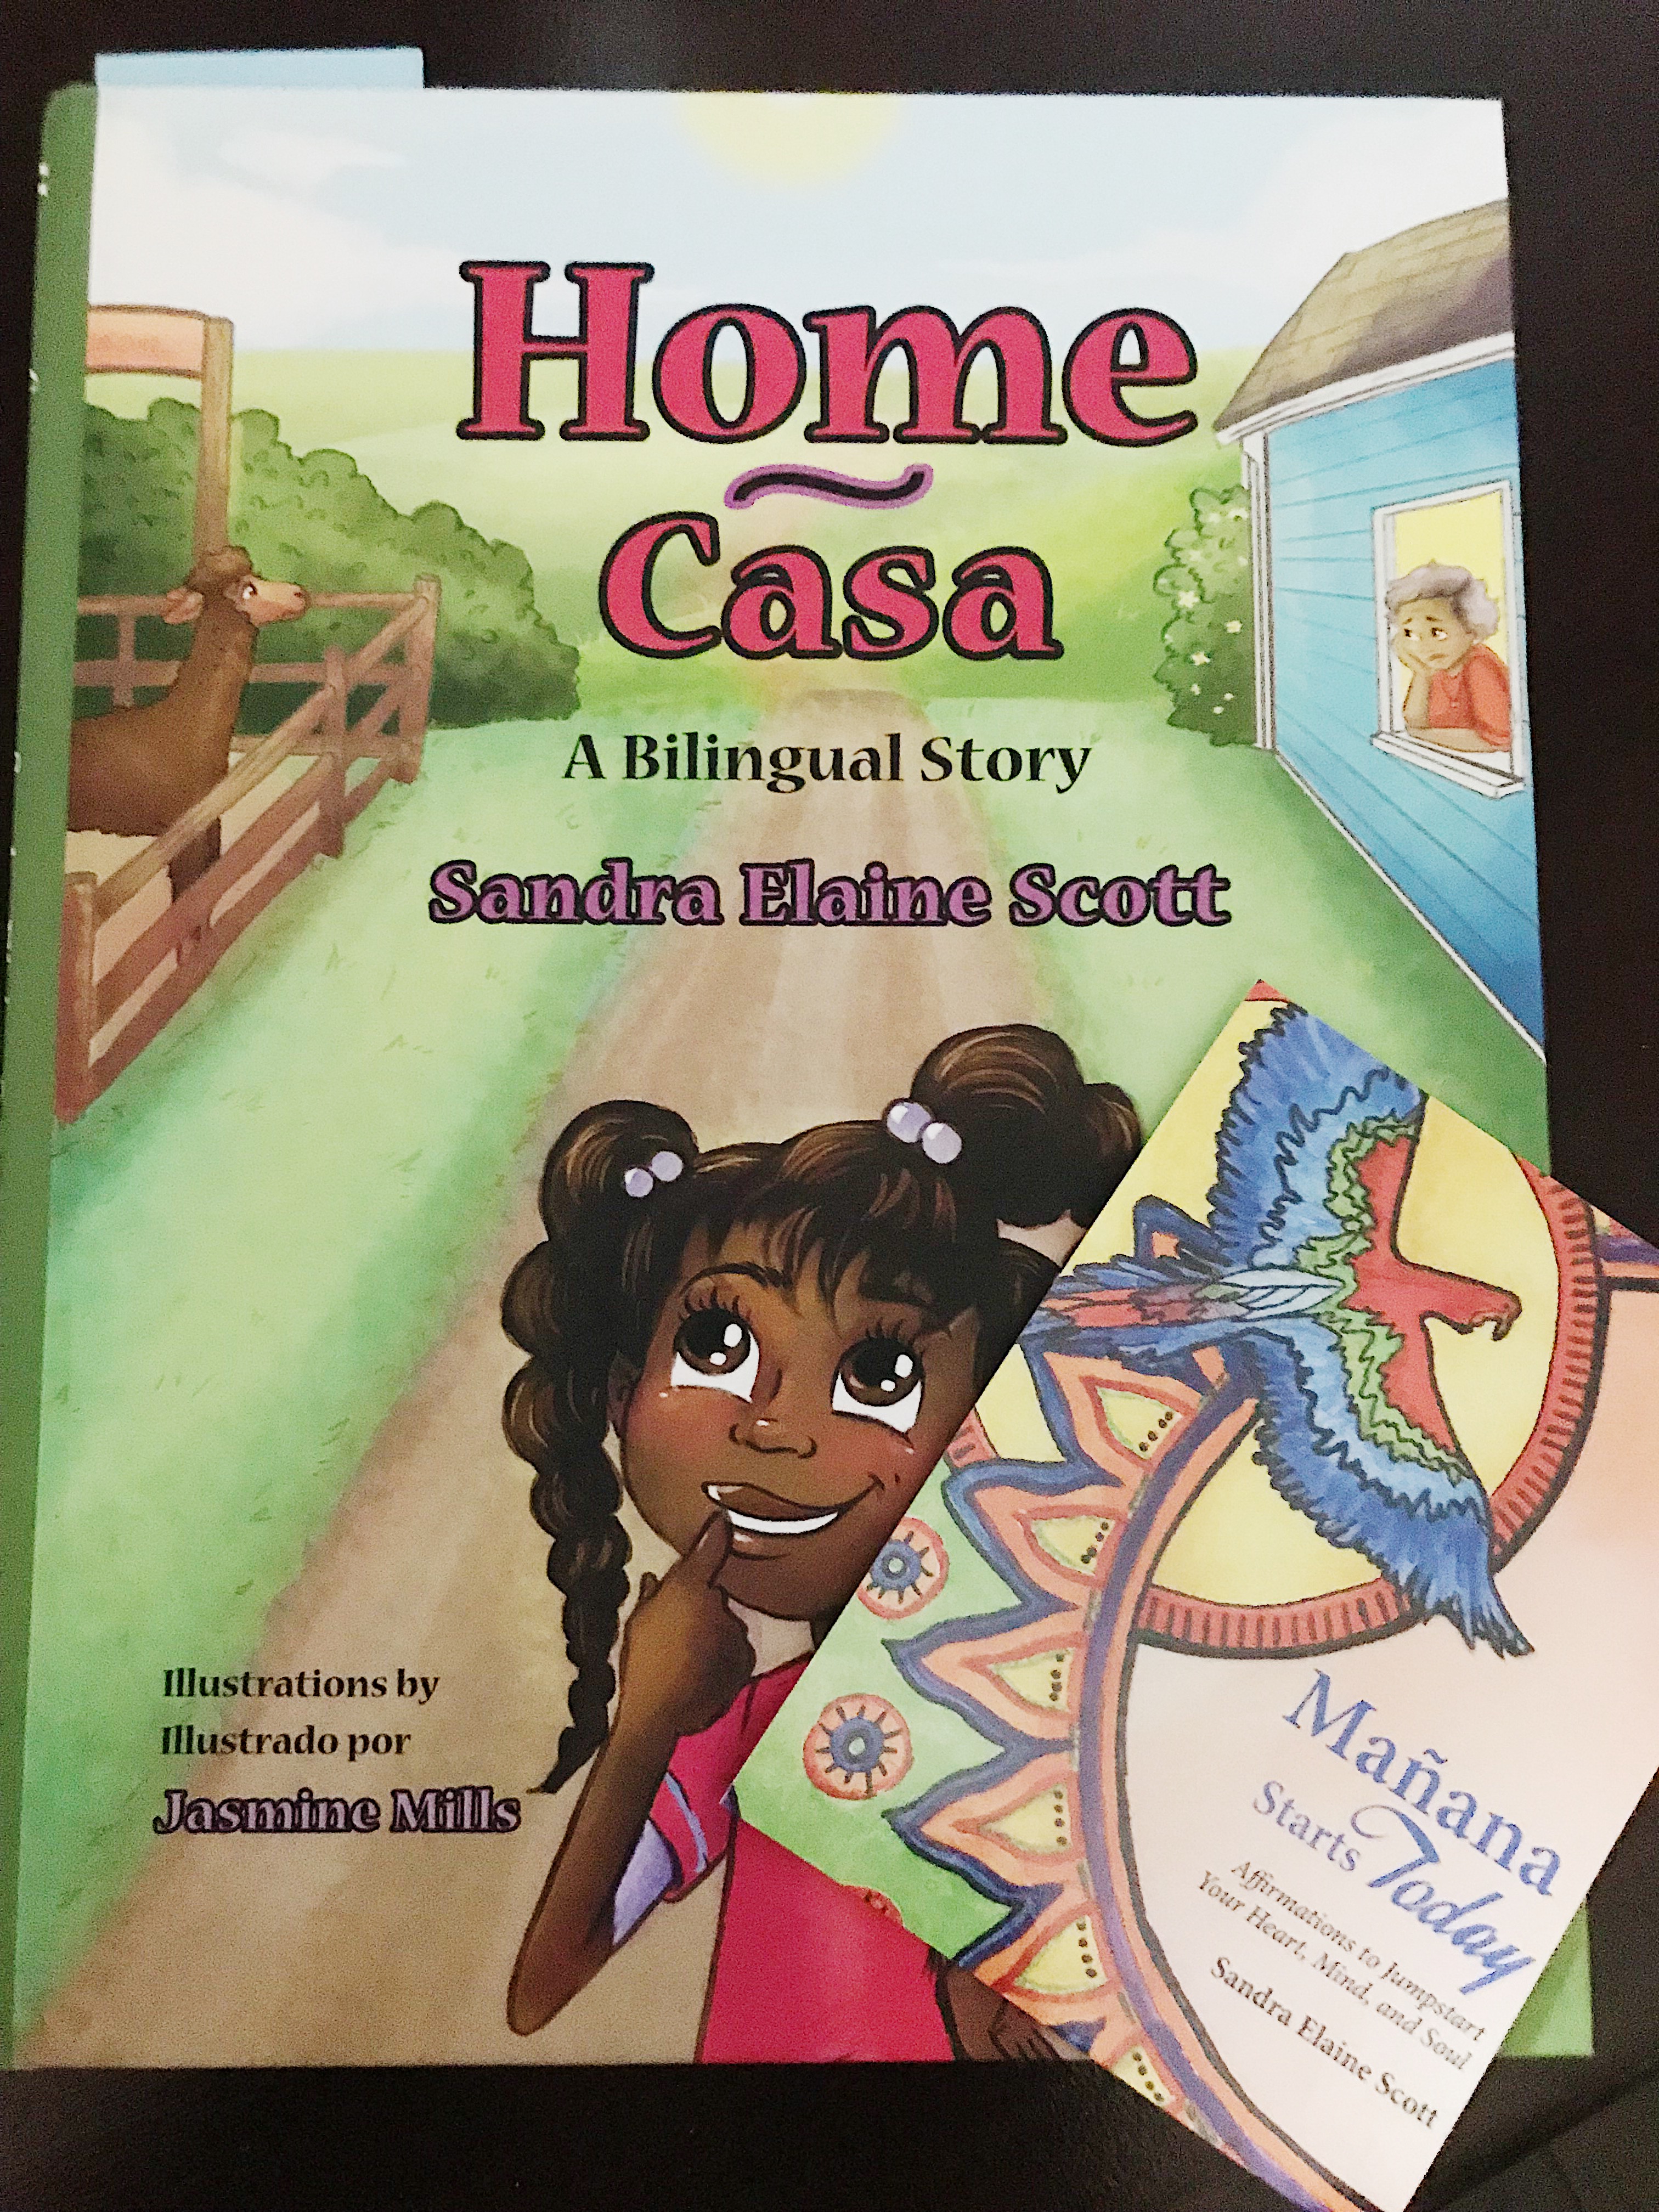 New Bilingual Children’s Book by Sandra Elaine Scott – Home/Casa